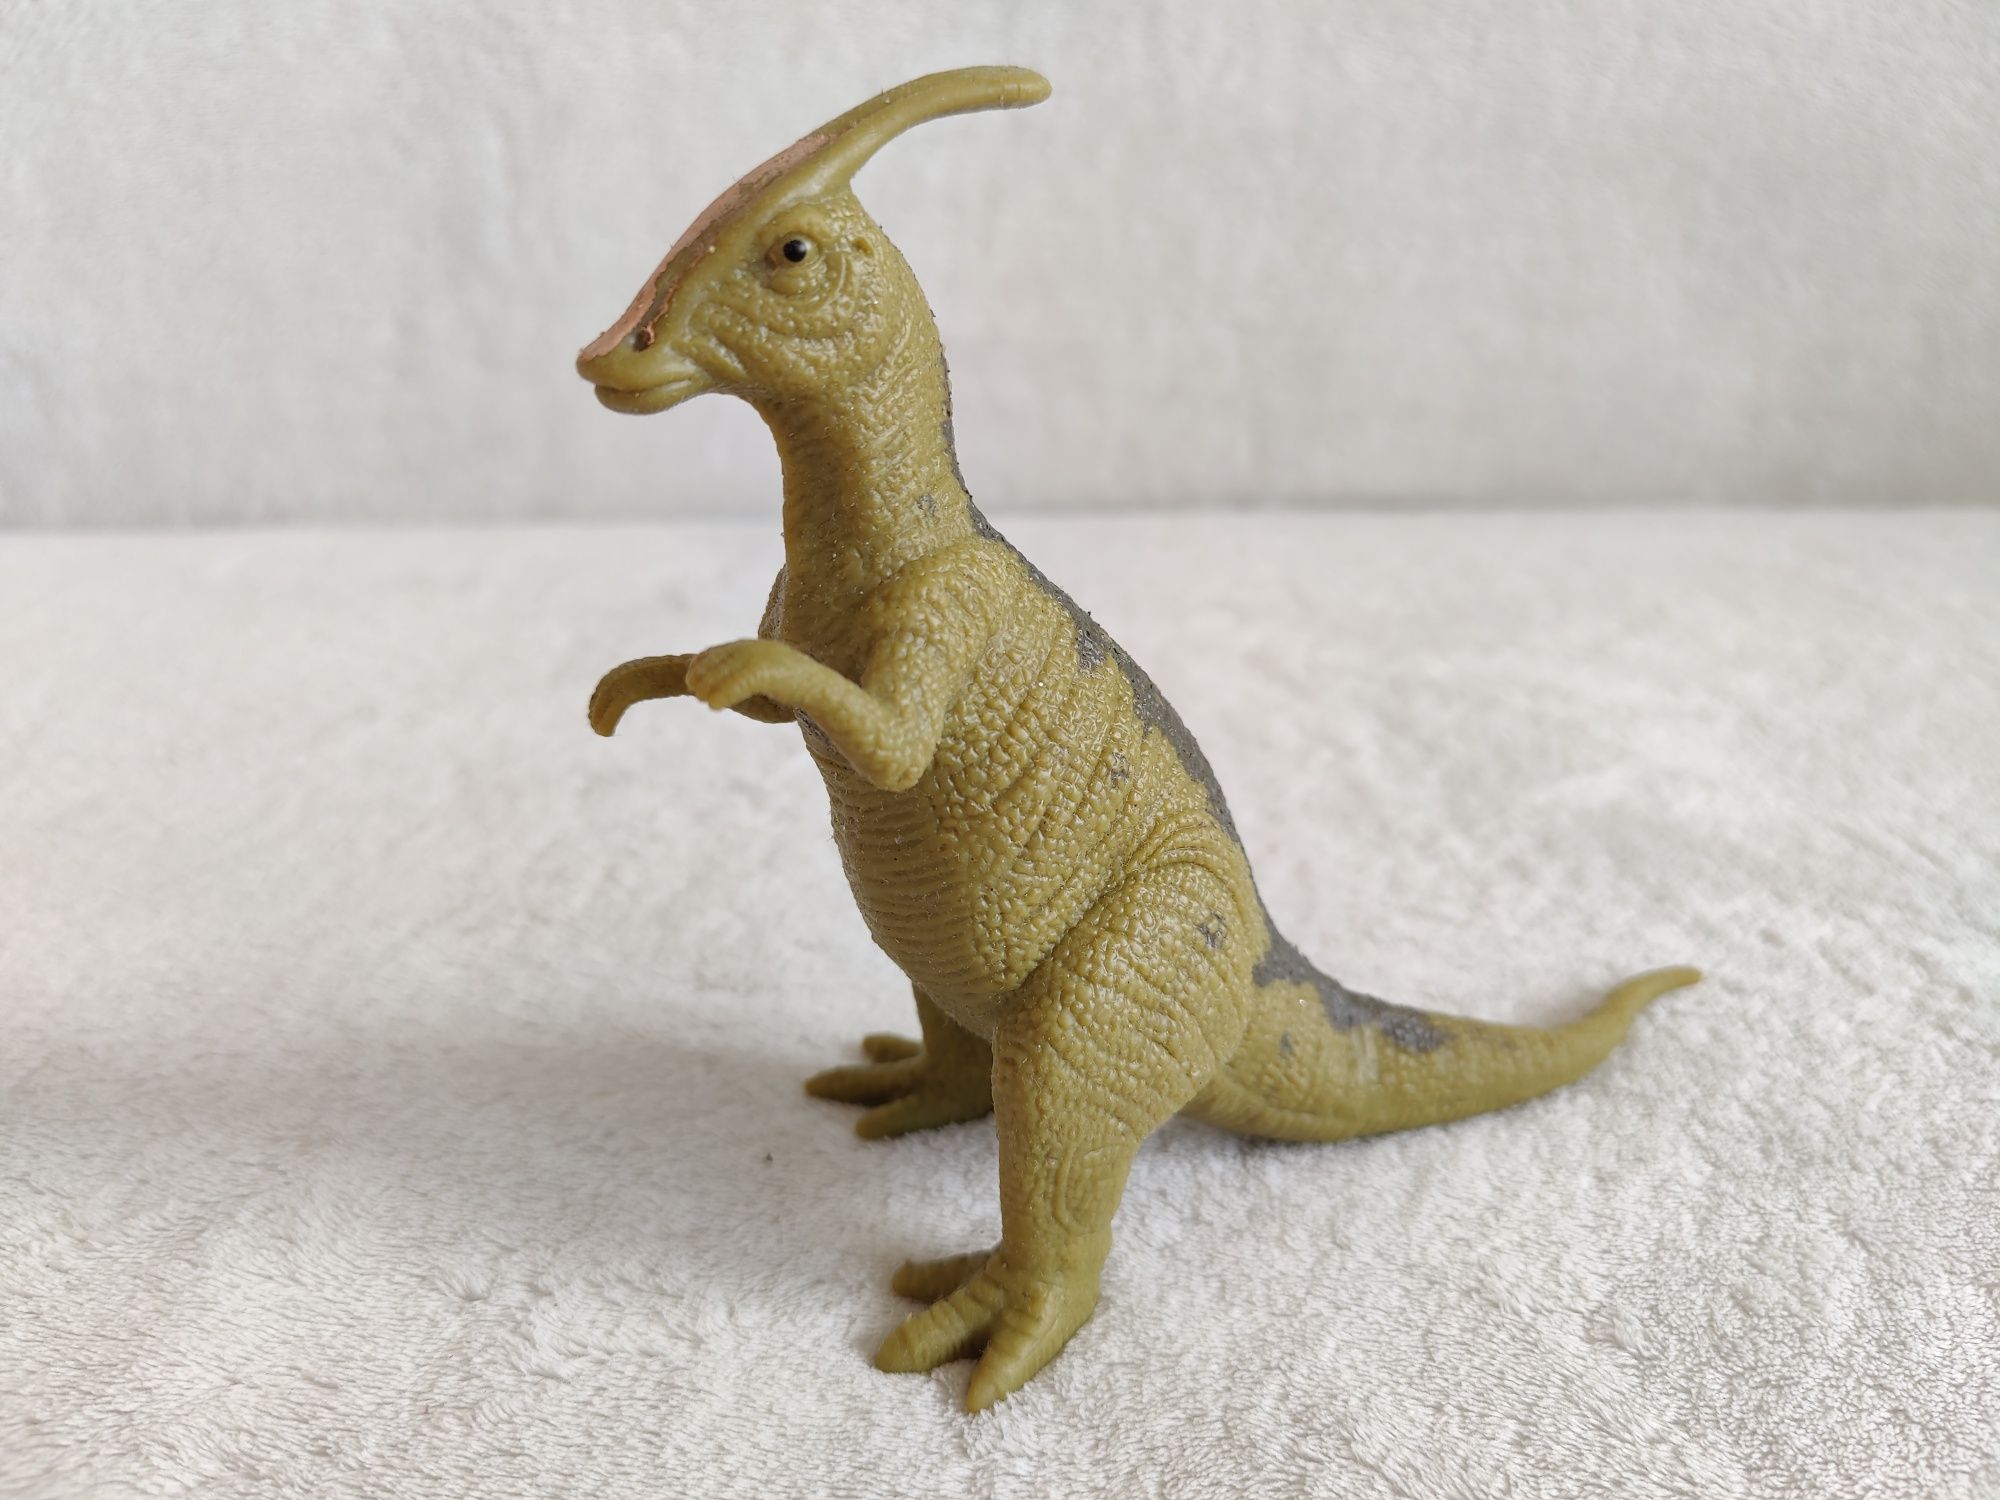 Miękki gumowy dinozaur Parazaurolof figurka zabawka